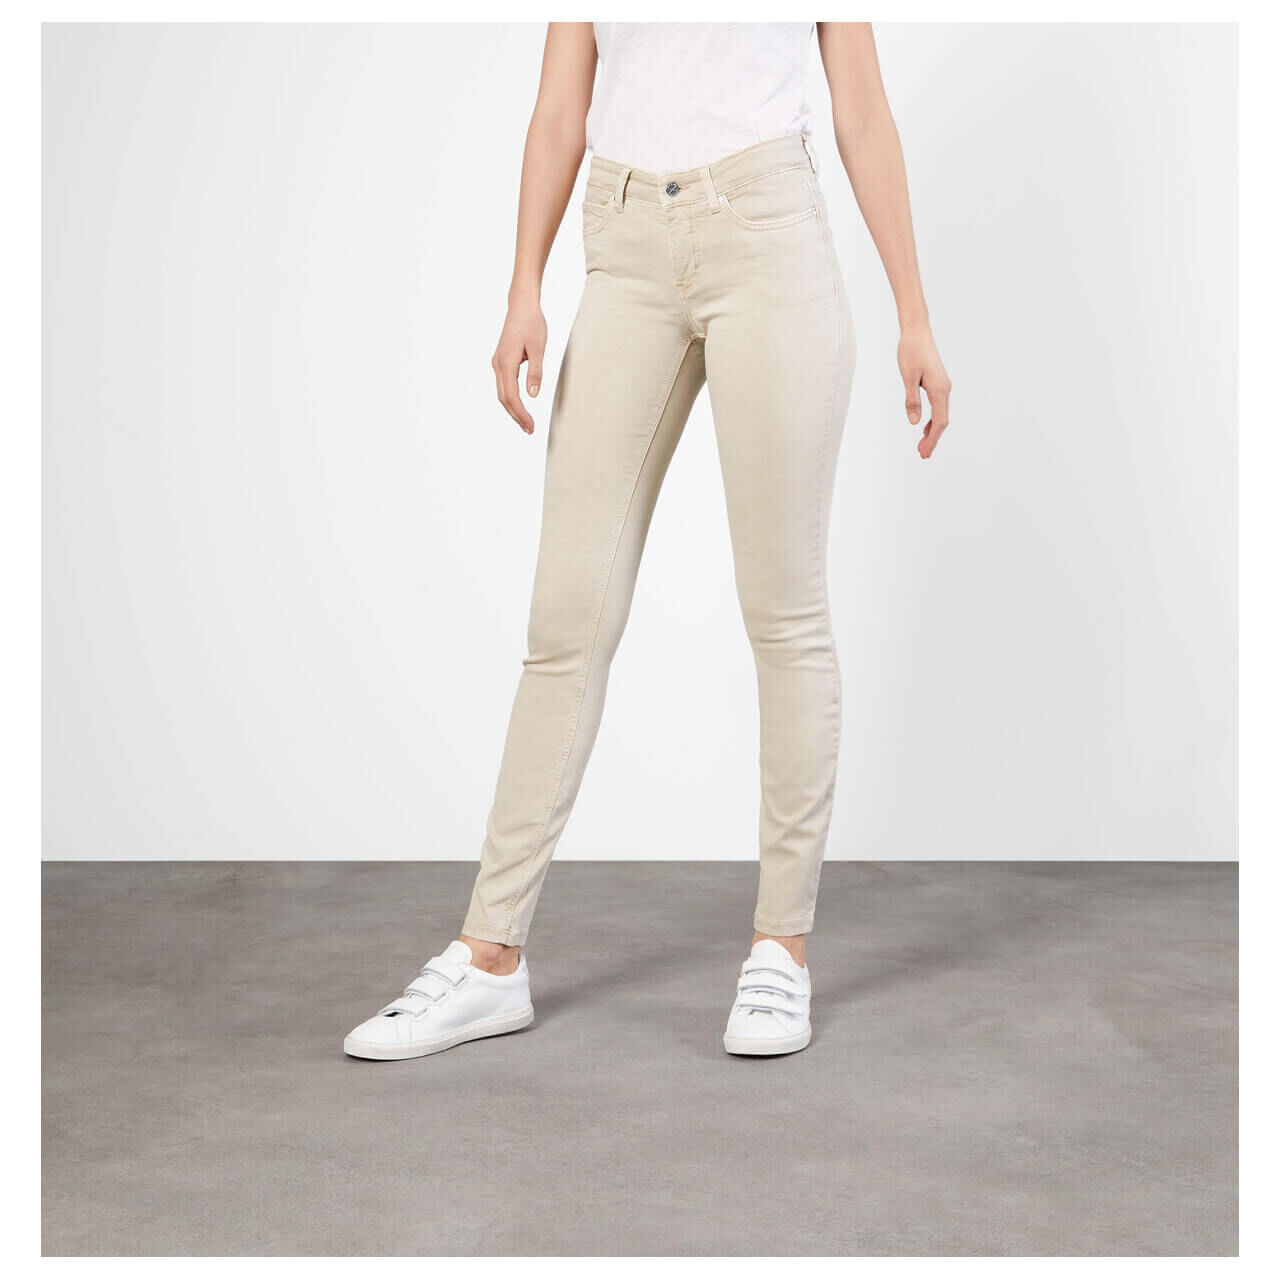 MAC Jeans Dream Skinny für Damen in Hellbeige, FarbNr.: 214W